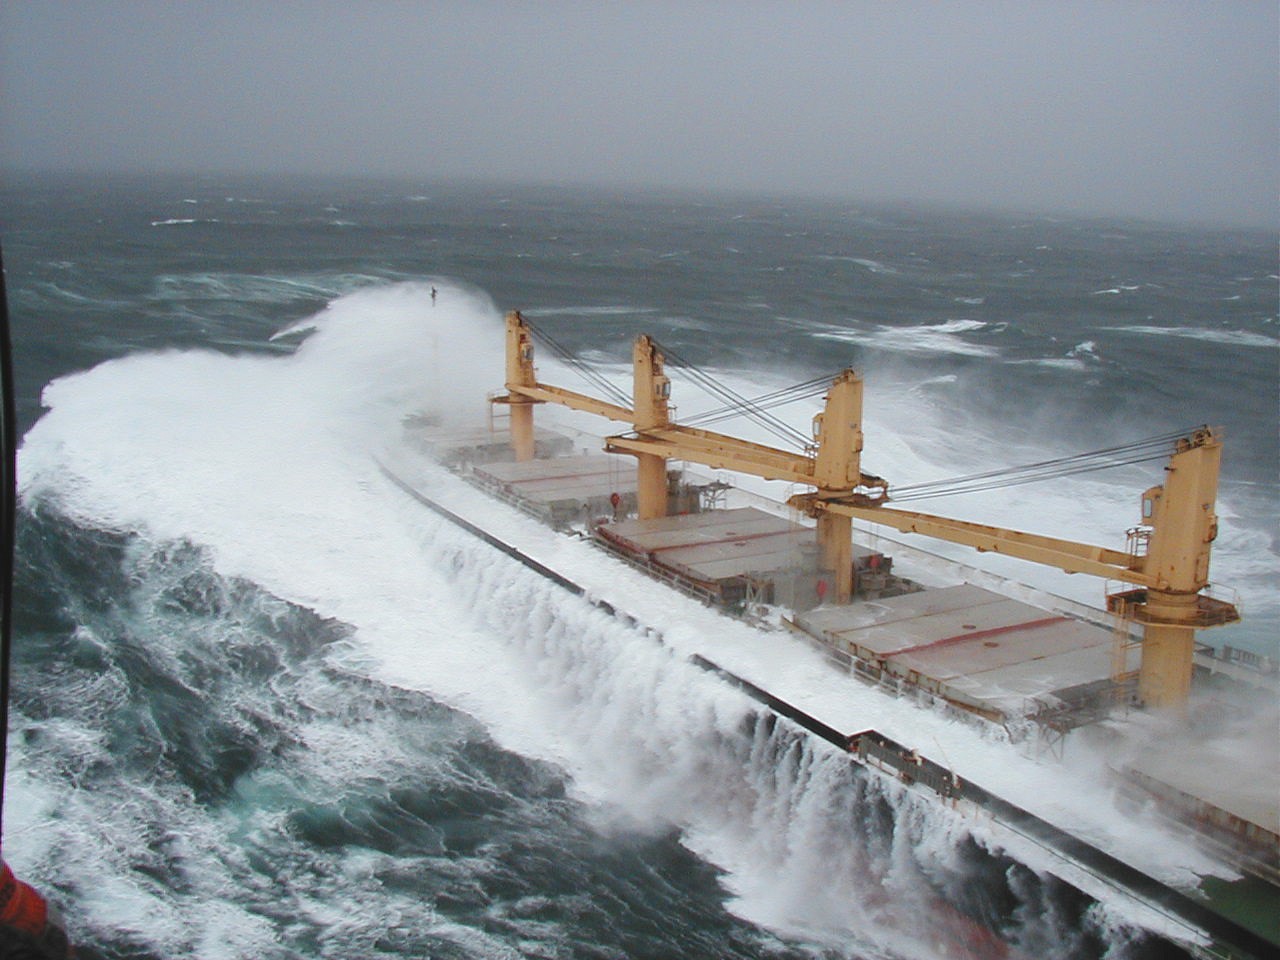 Maritime perils on rough sea - Marine insurance